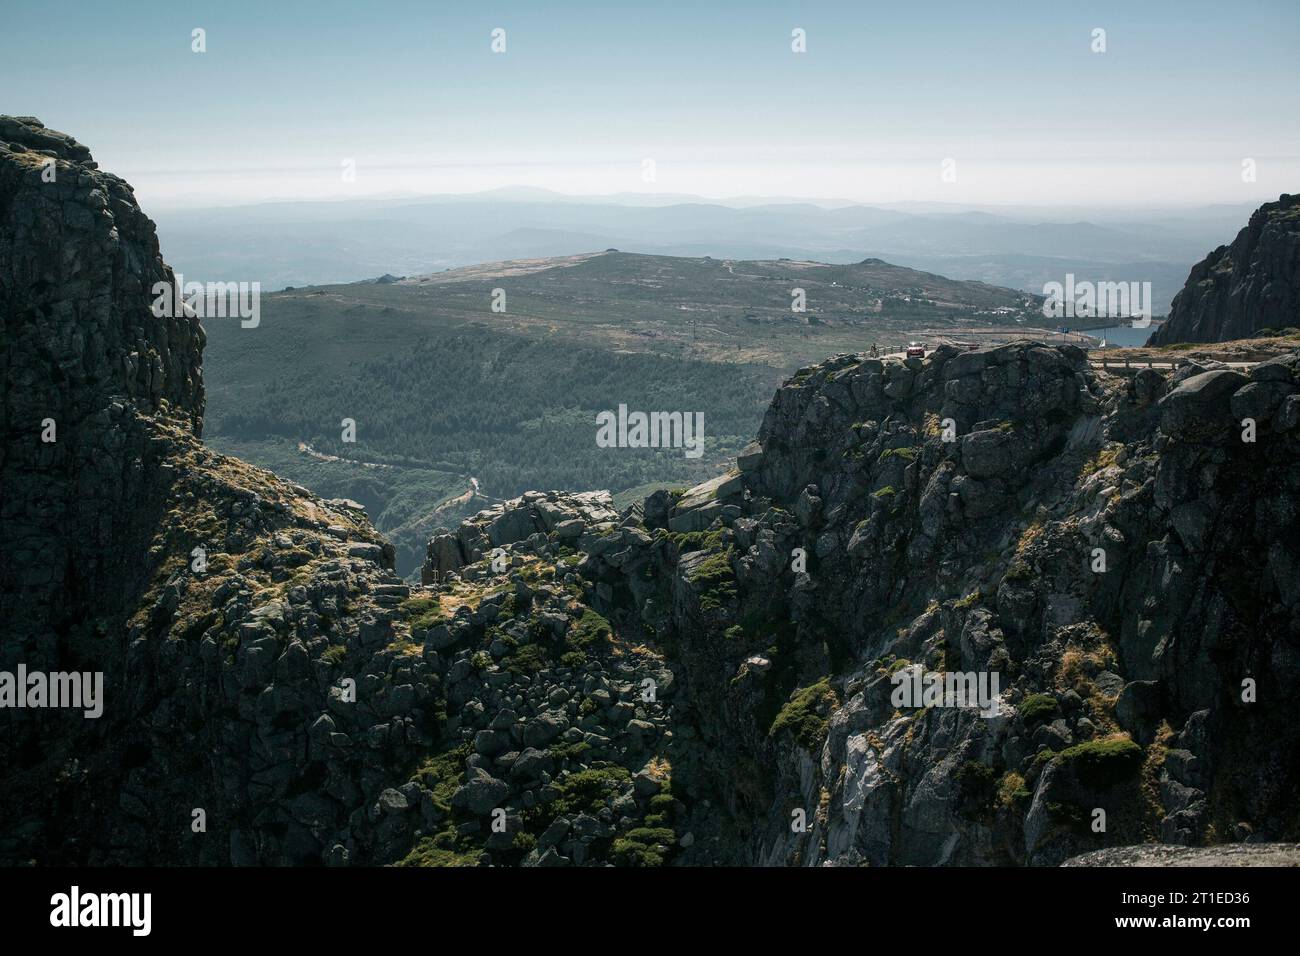 A view of the cliffs in a mountain range in Serra da Estrela, Portugal. Stock Photo